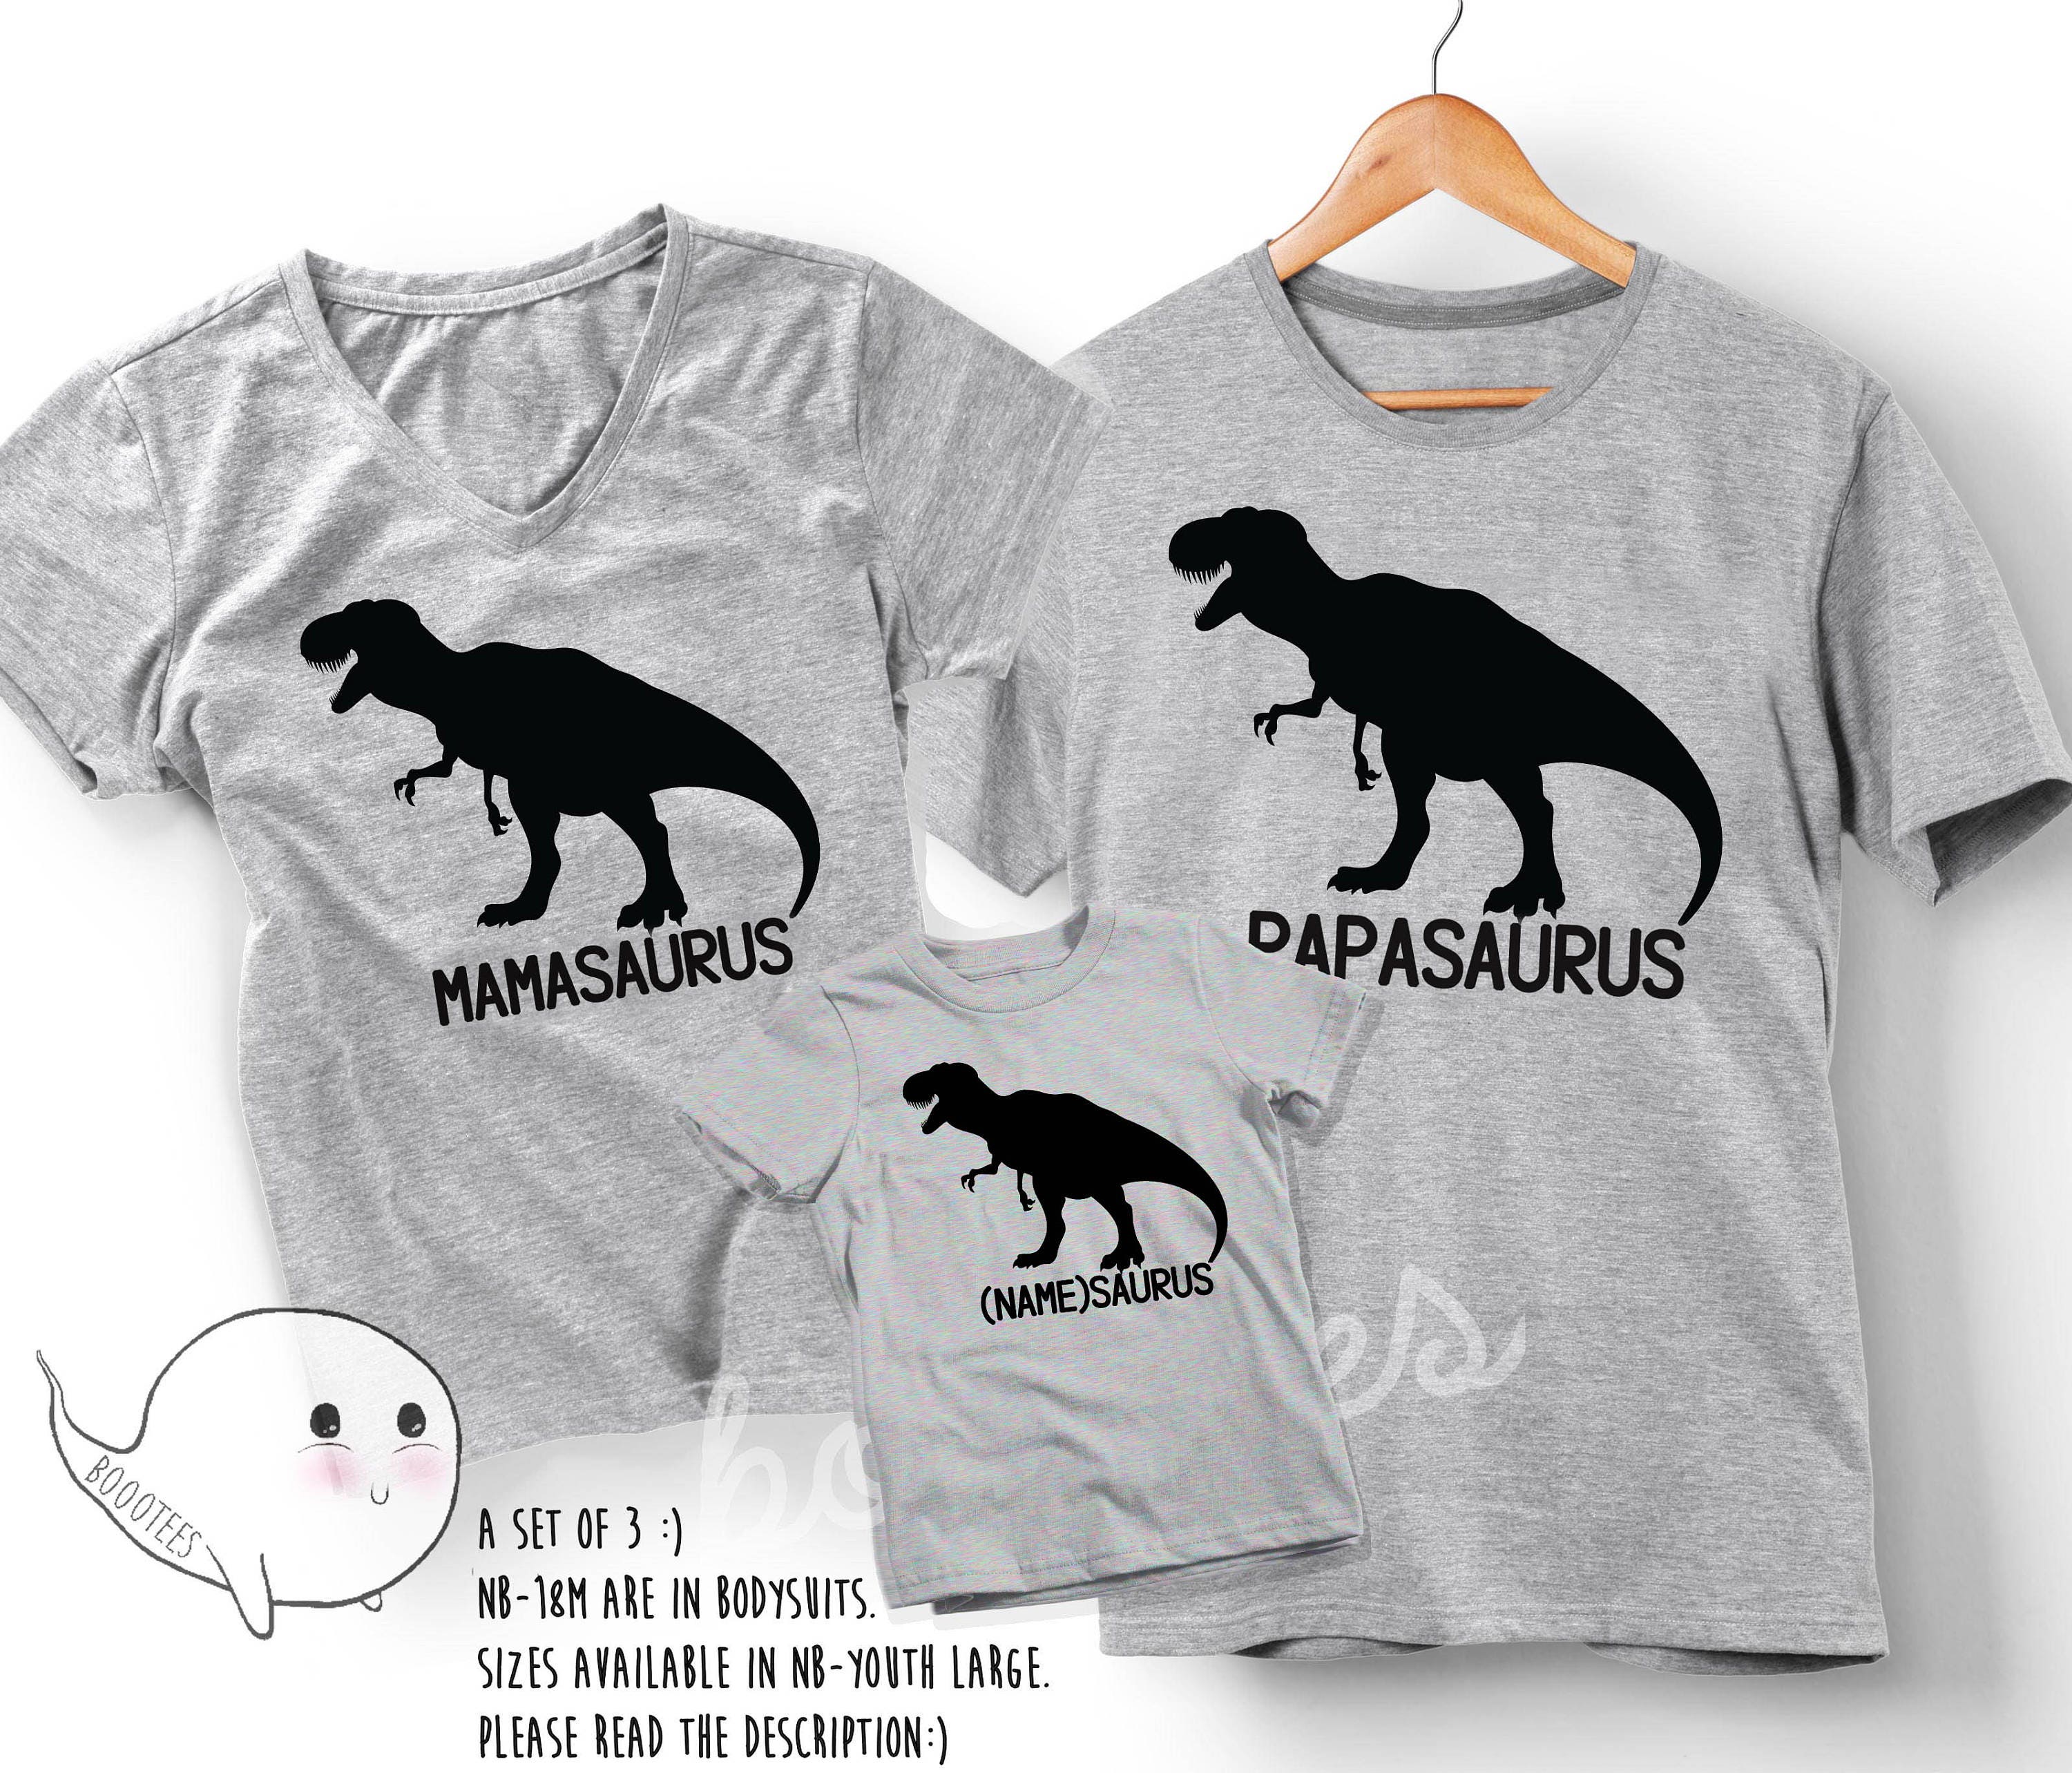 Mommysaurus Daddysaurus BabysaurusDino Tees Dinosaur Family Shirts Trex Birthday Shirts for Family 